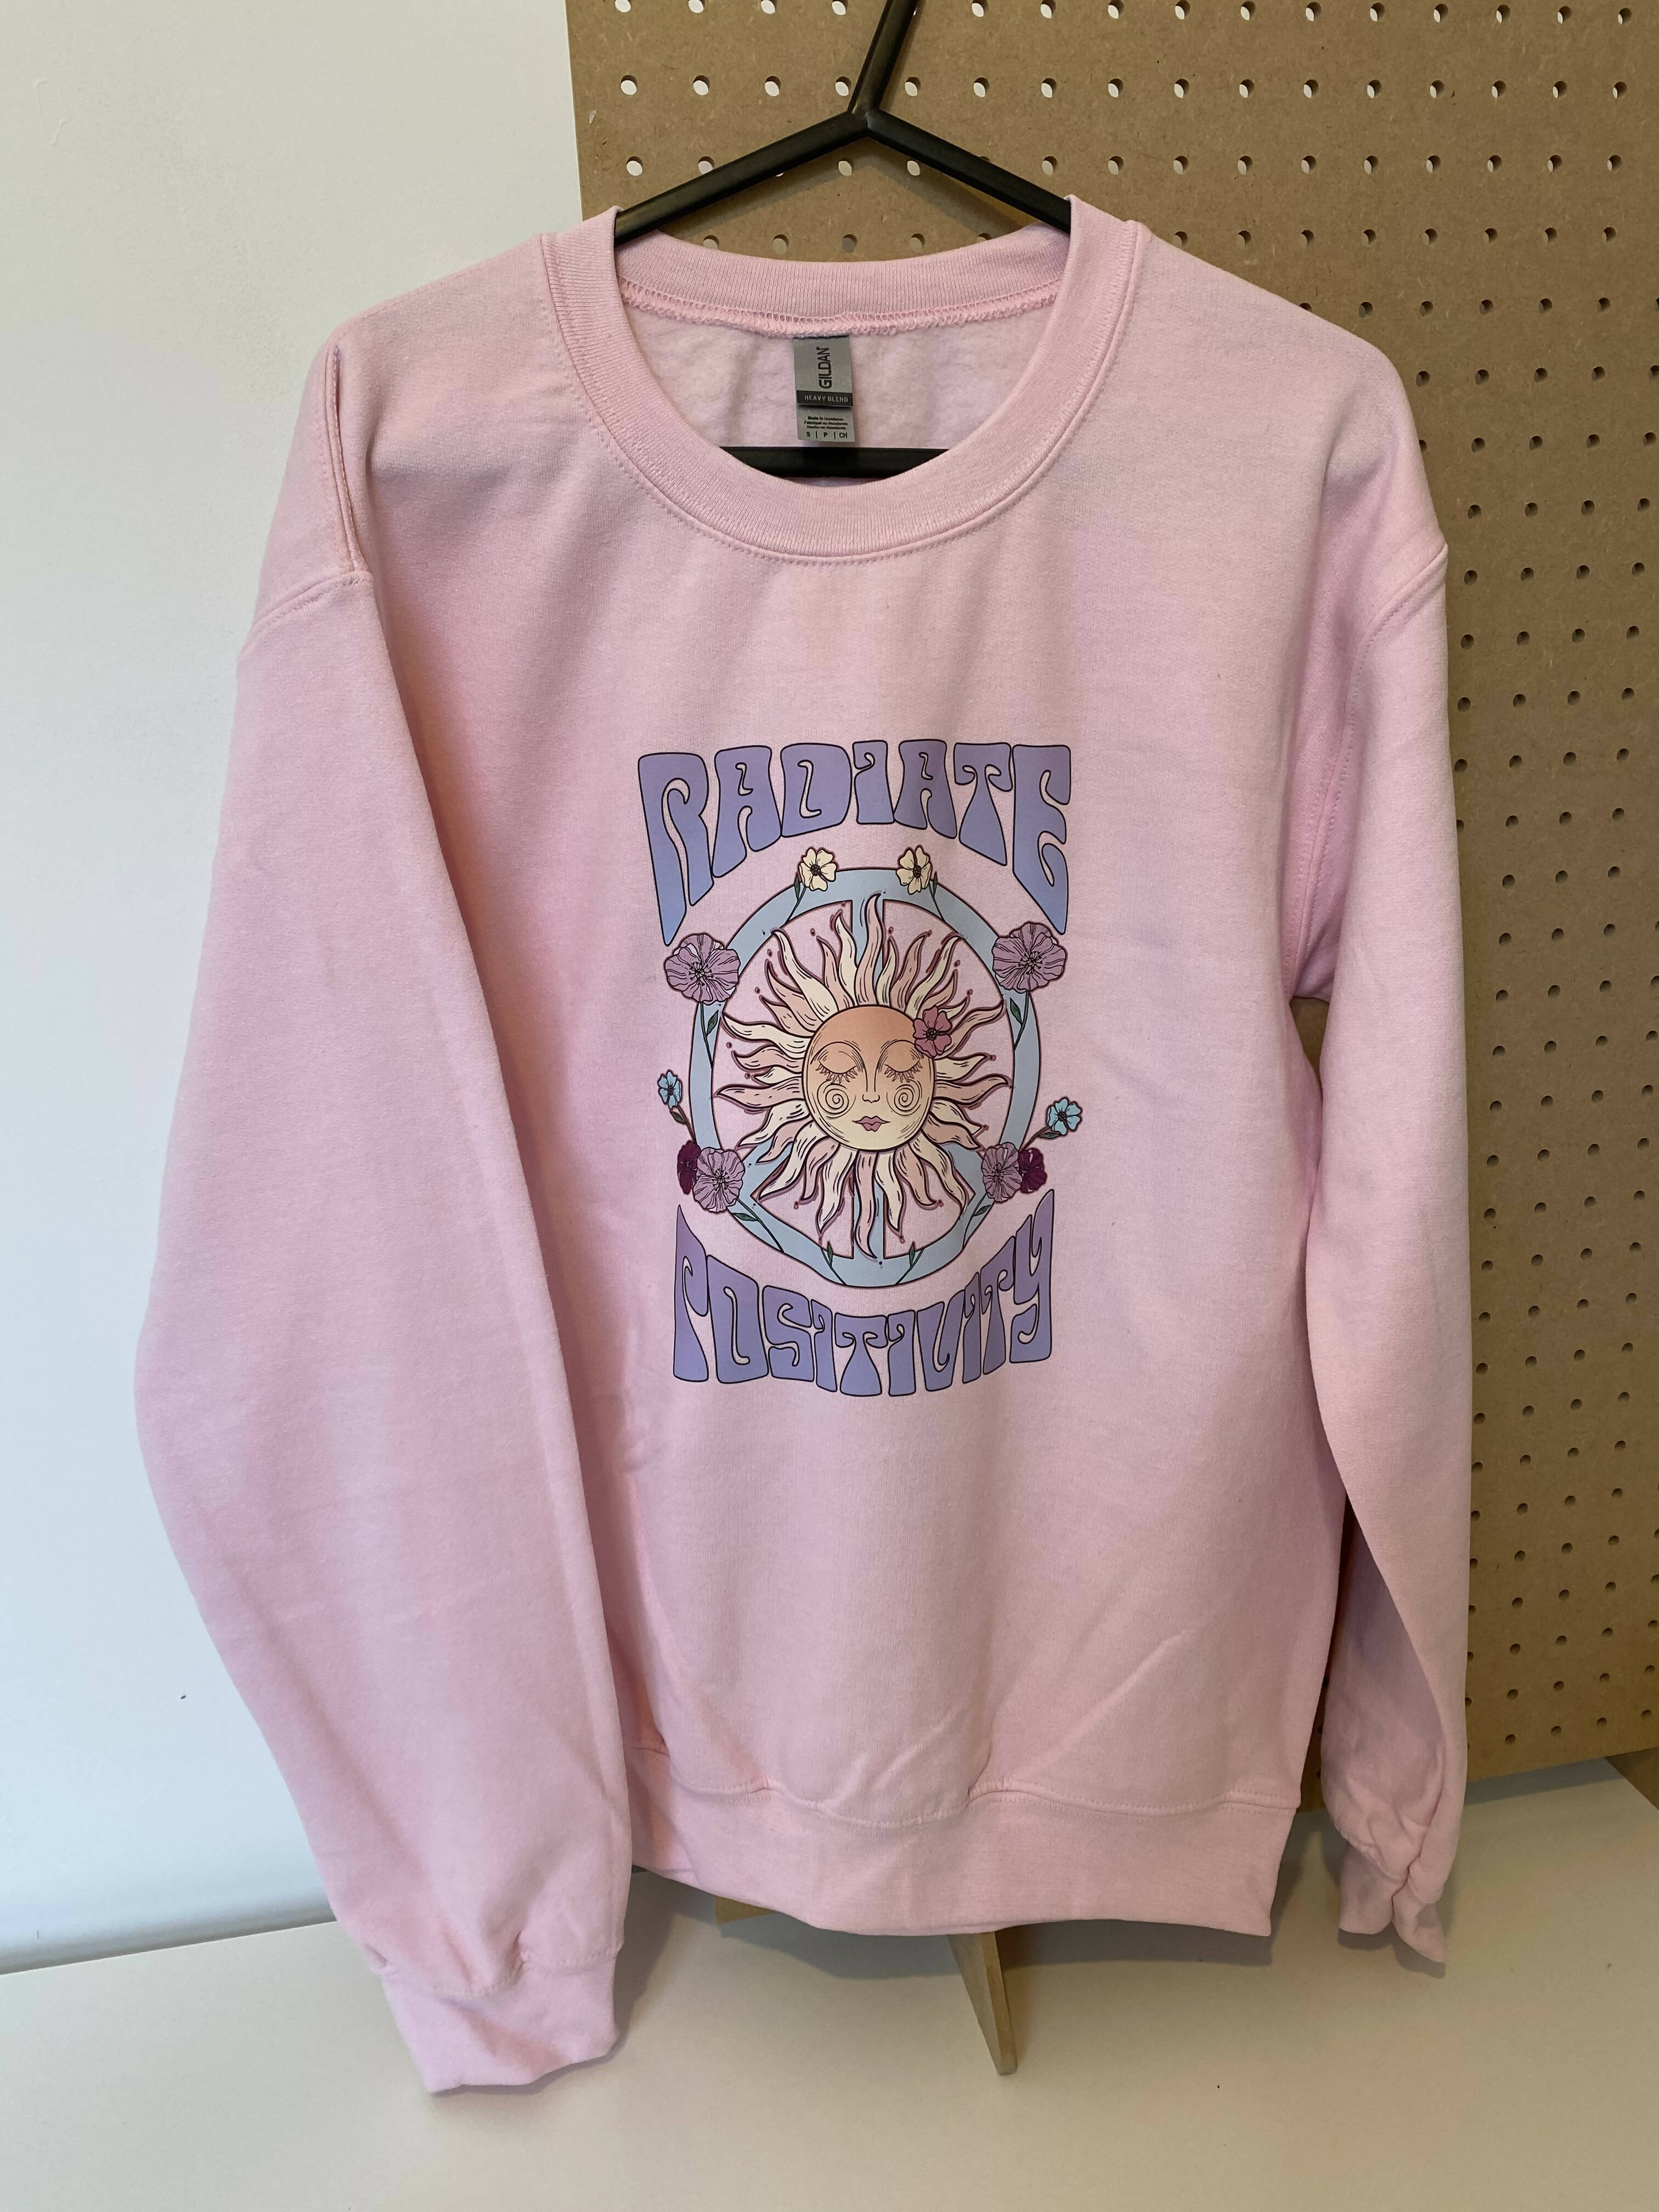 Radiate positivity pink sweatshirt